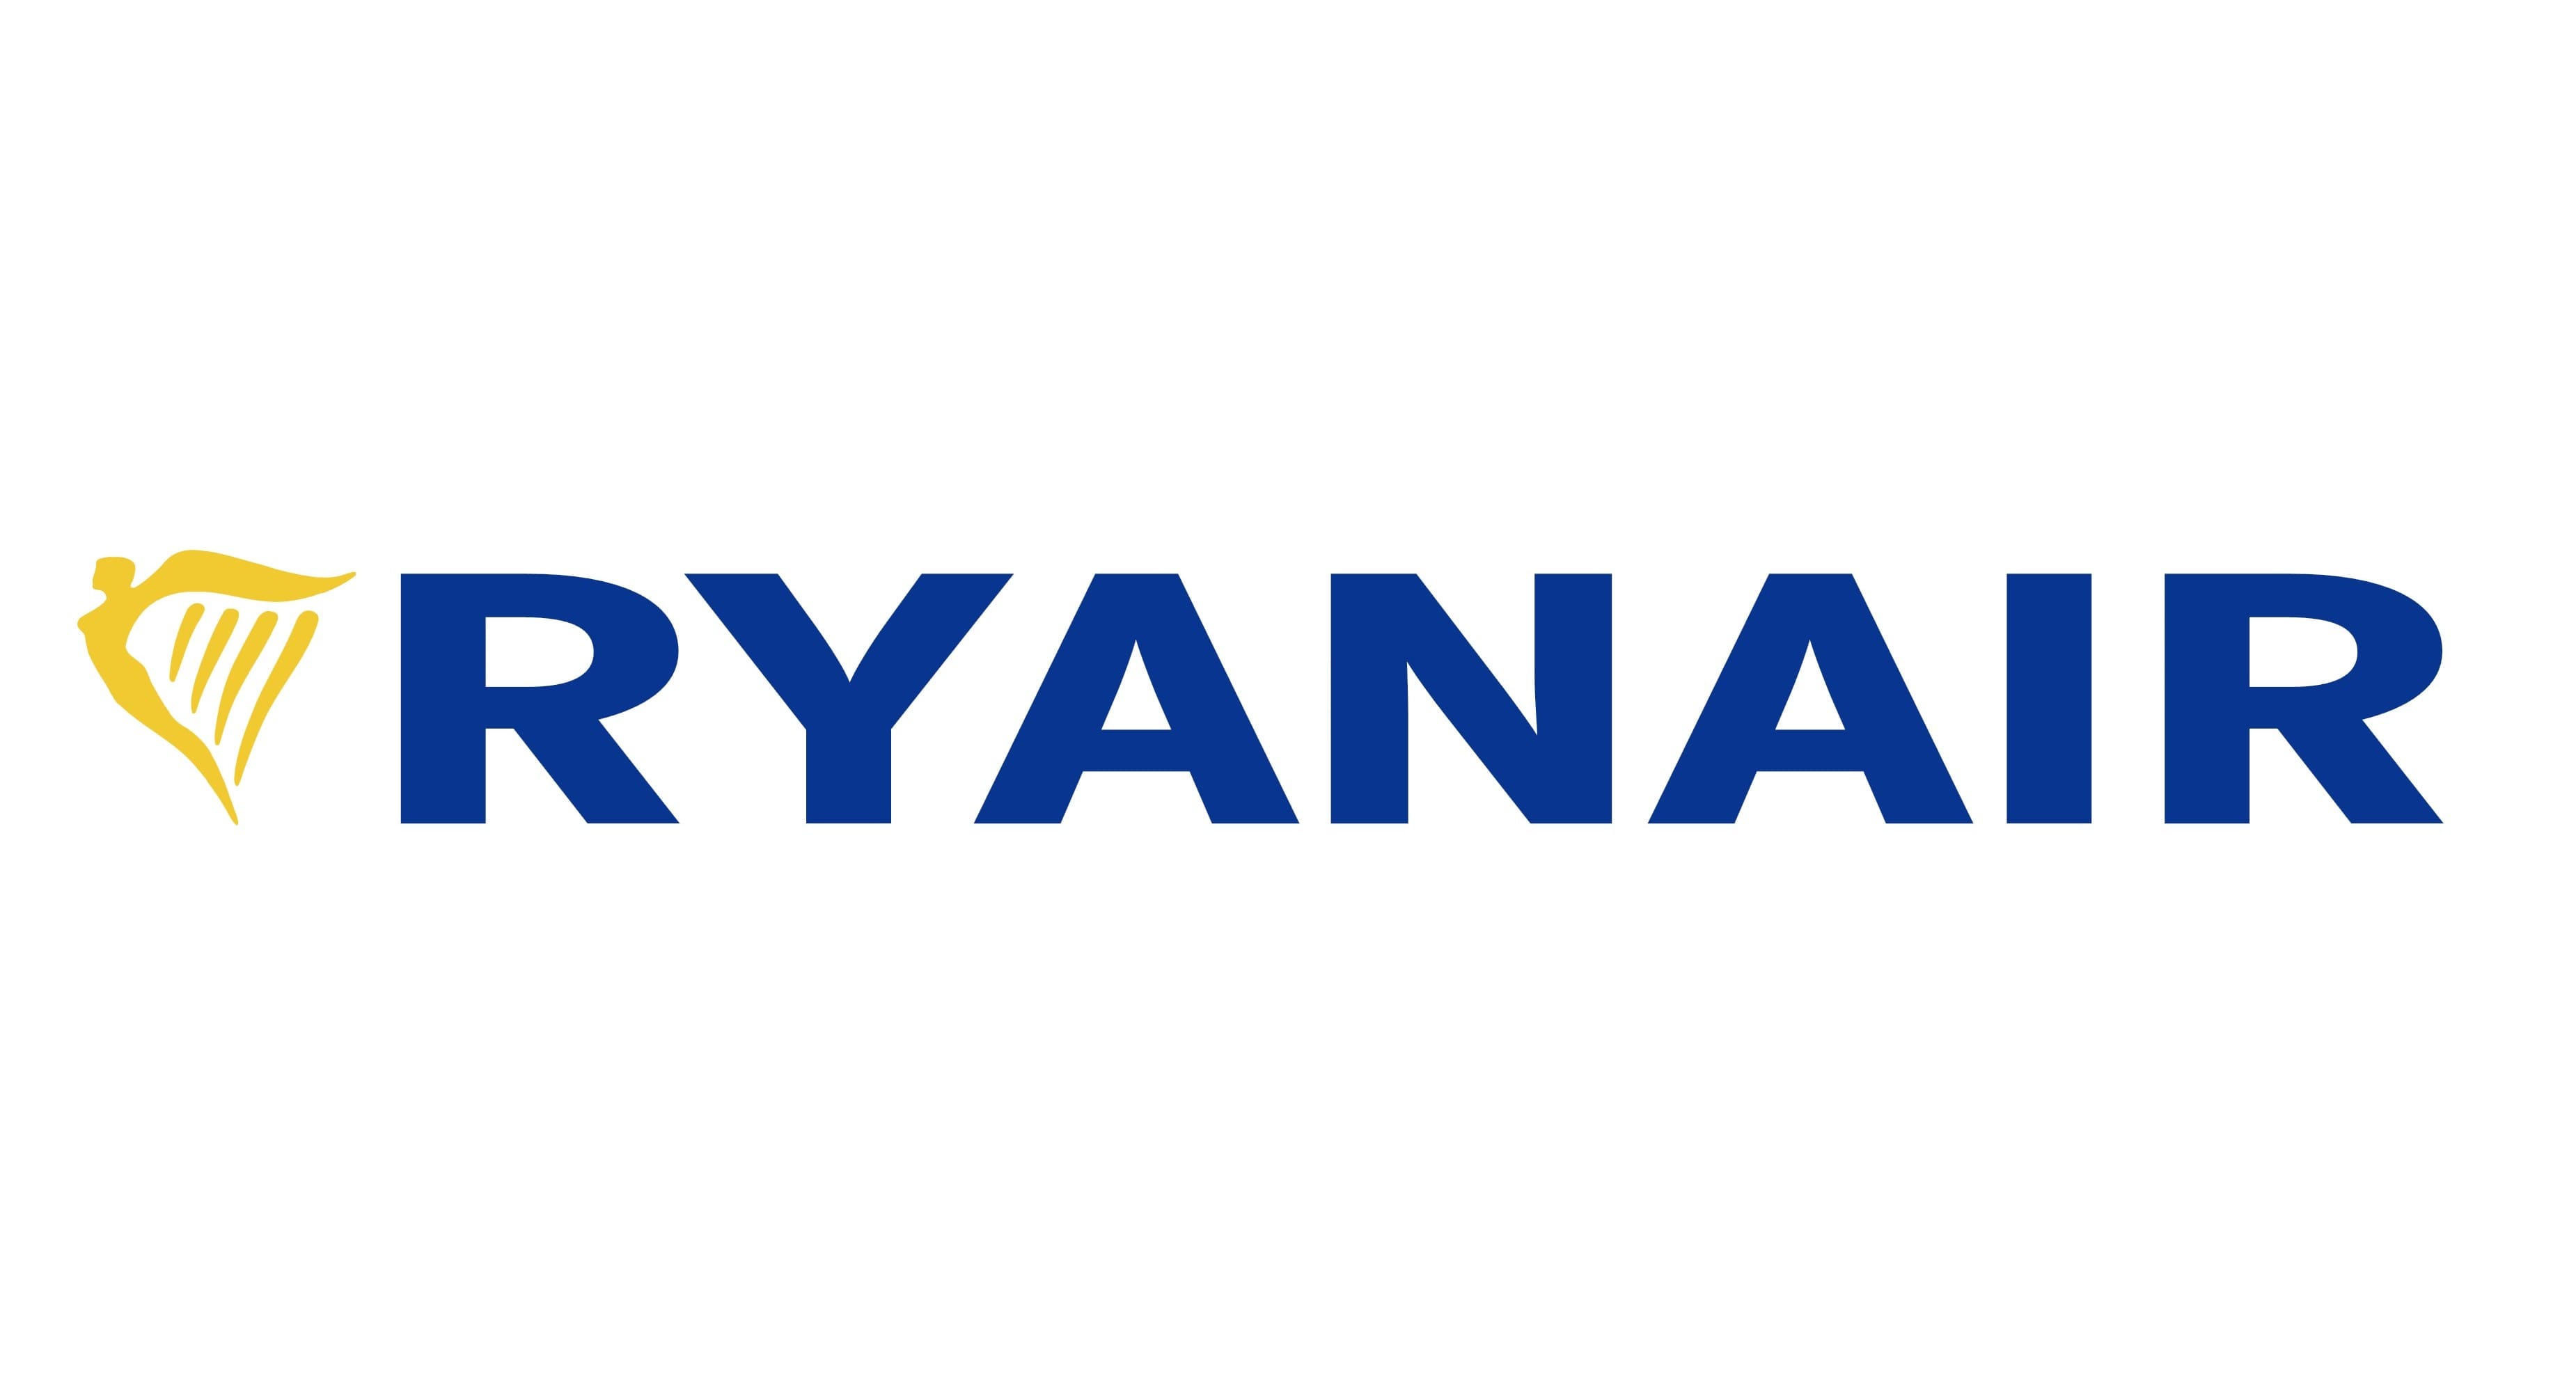 Logo de Ryanair